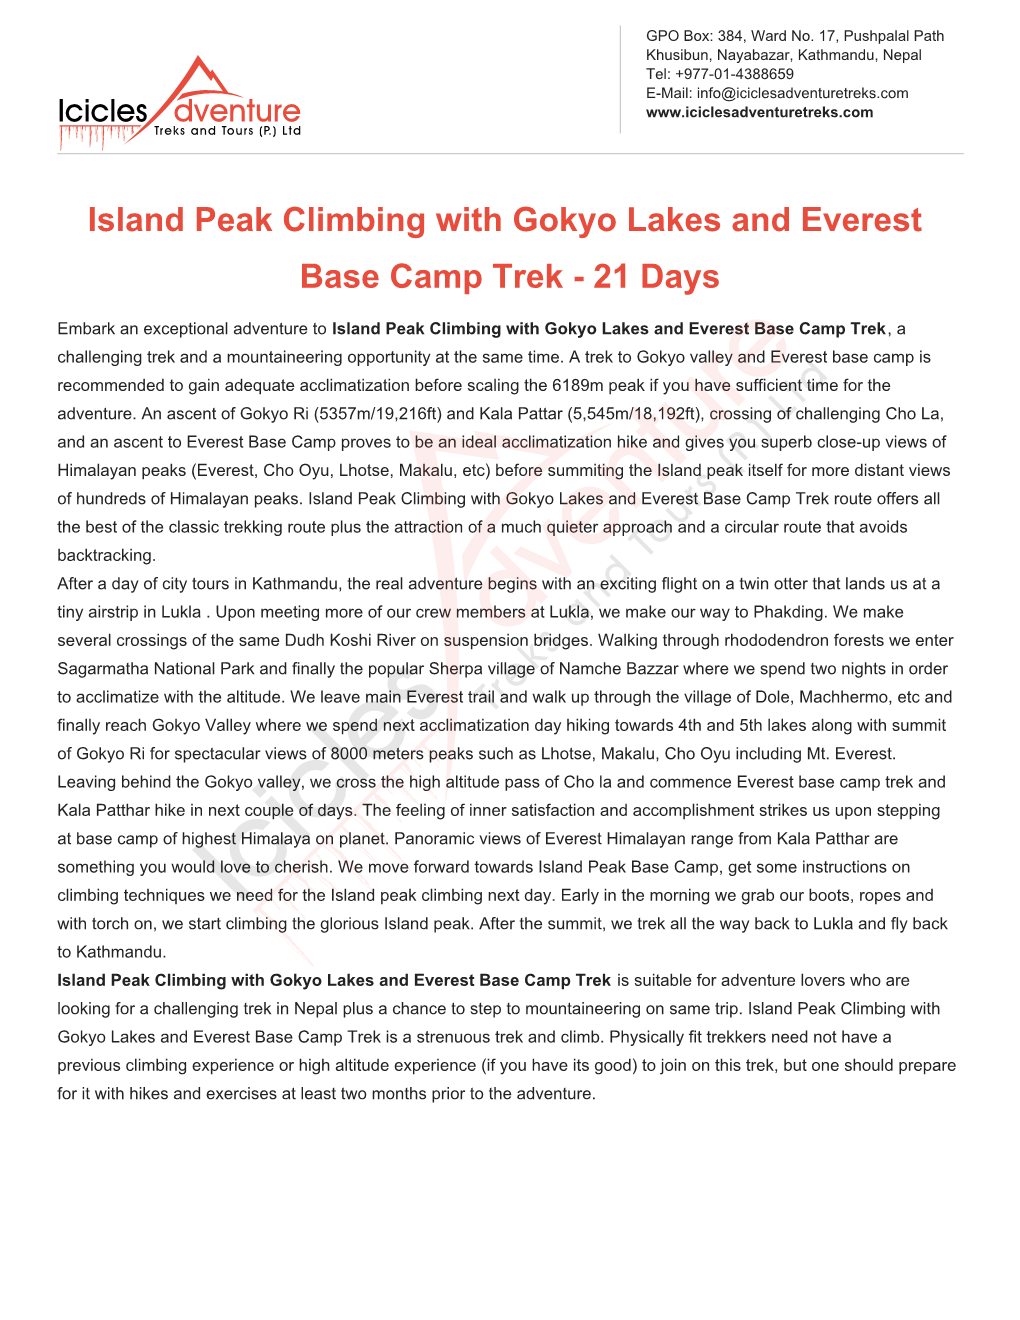 Island Peak Climbing with Gokyo Lakes and Everest Base Camp Trek - 21 Days